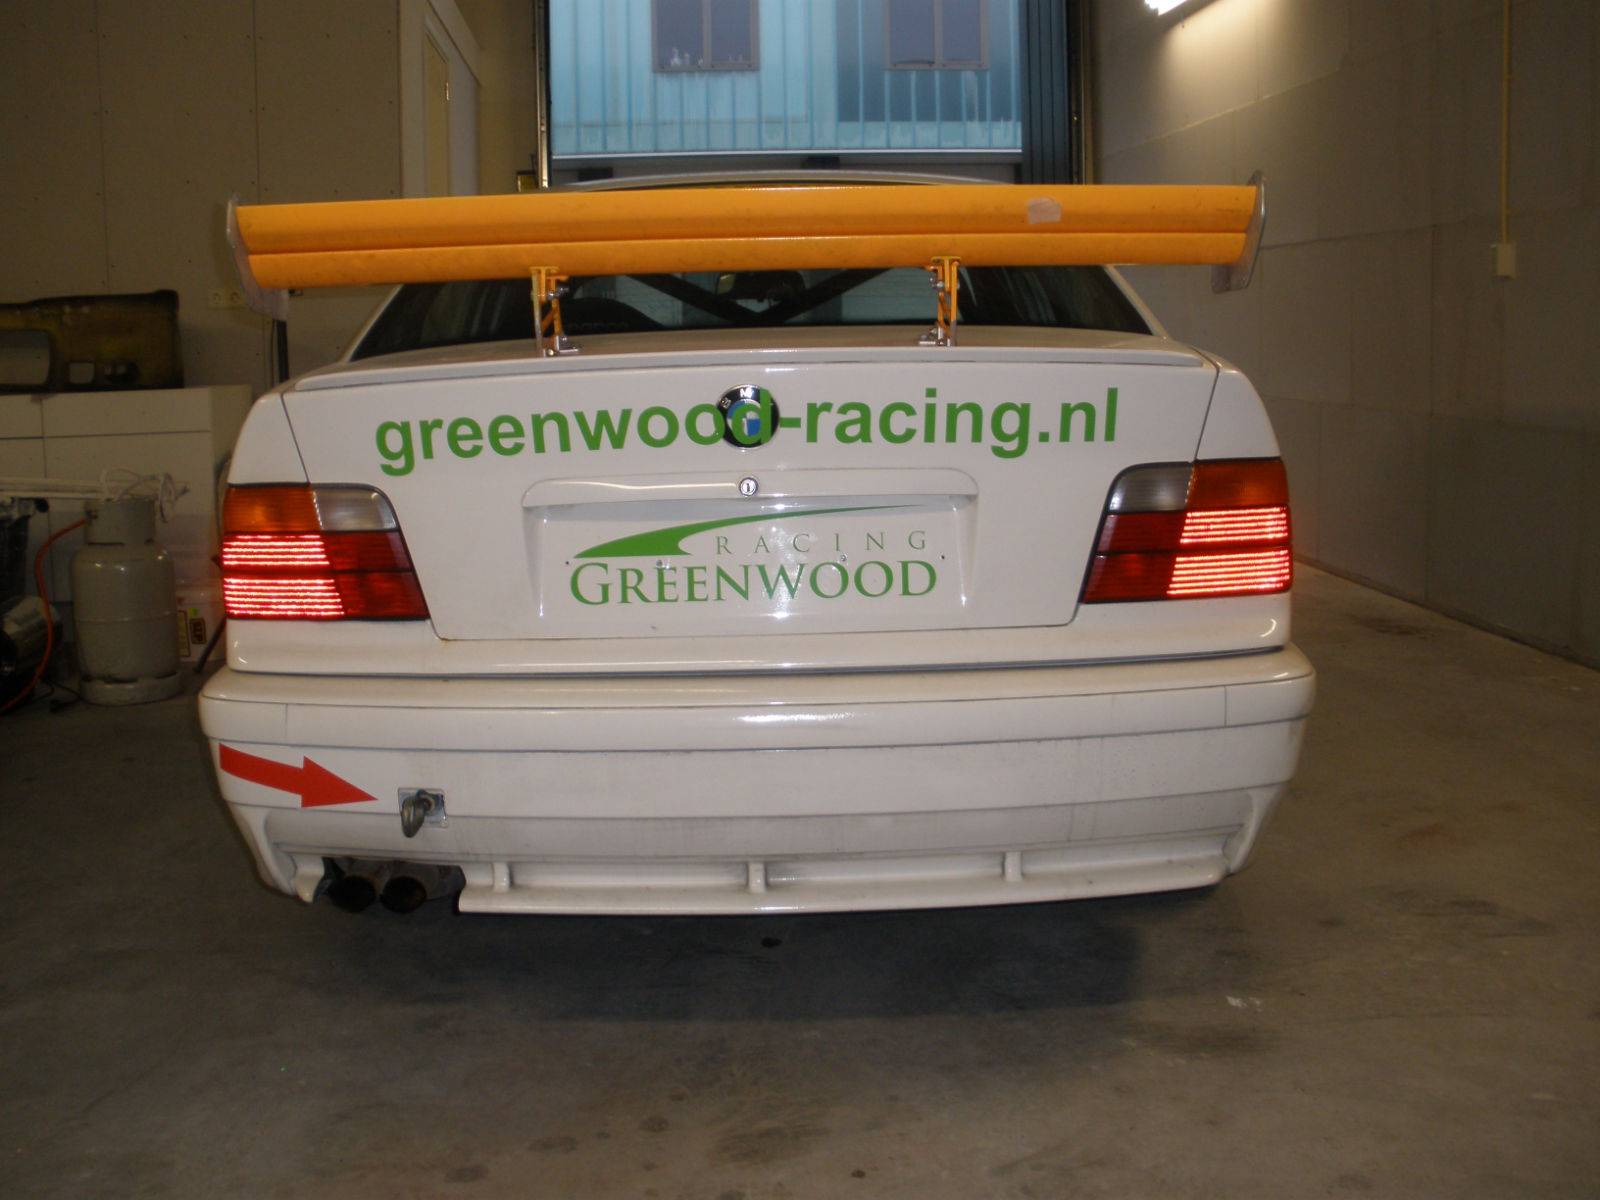 E36 greenwood-racing.nl 05